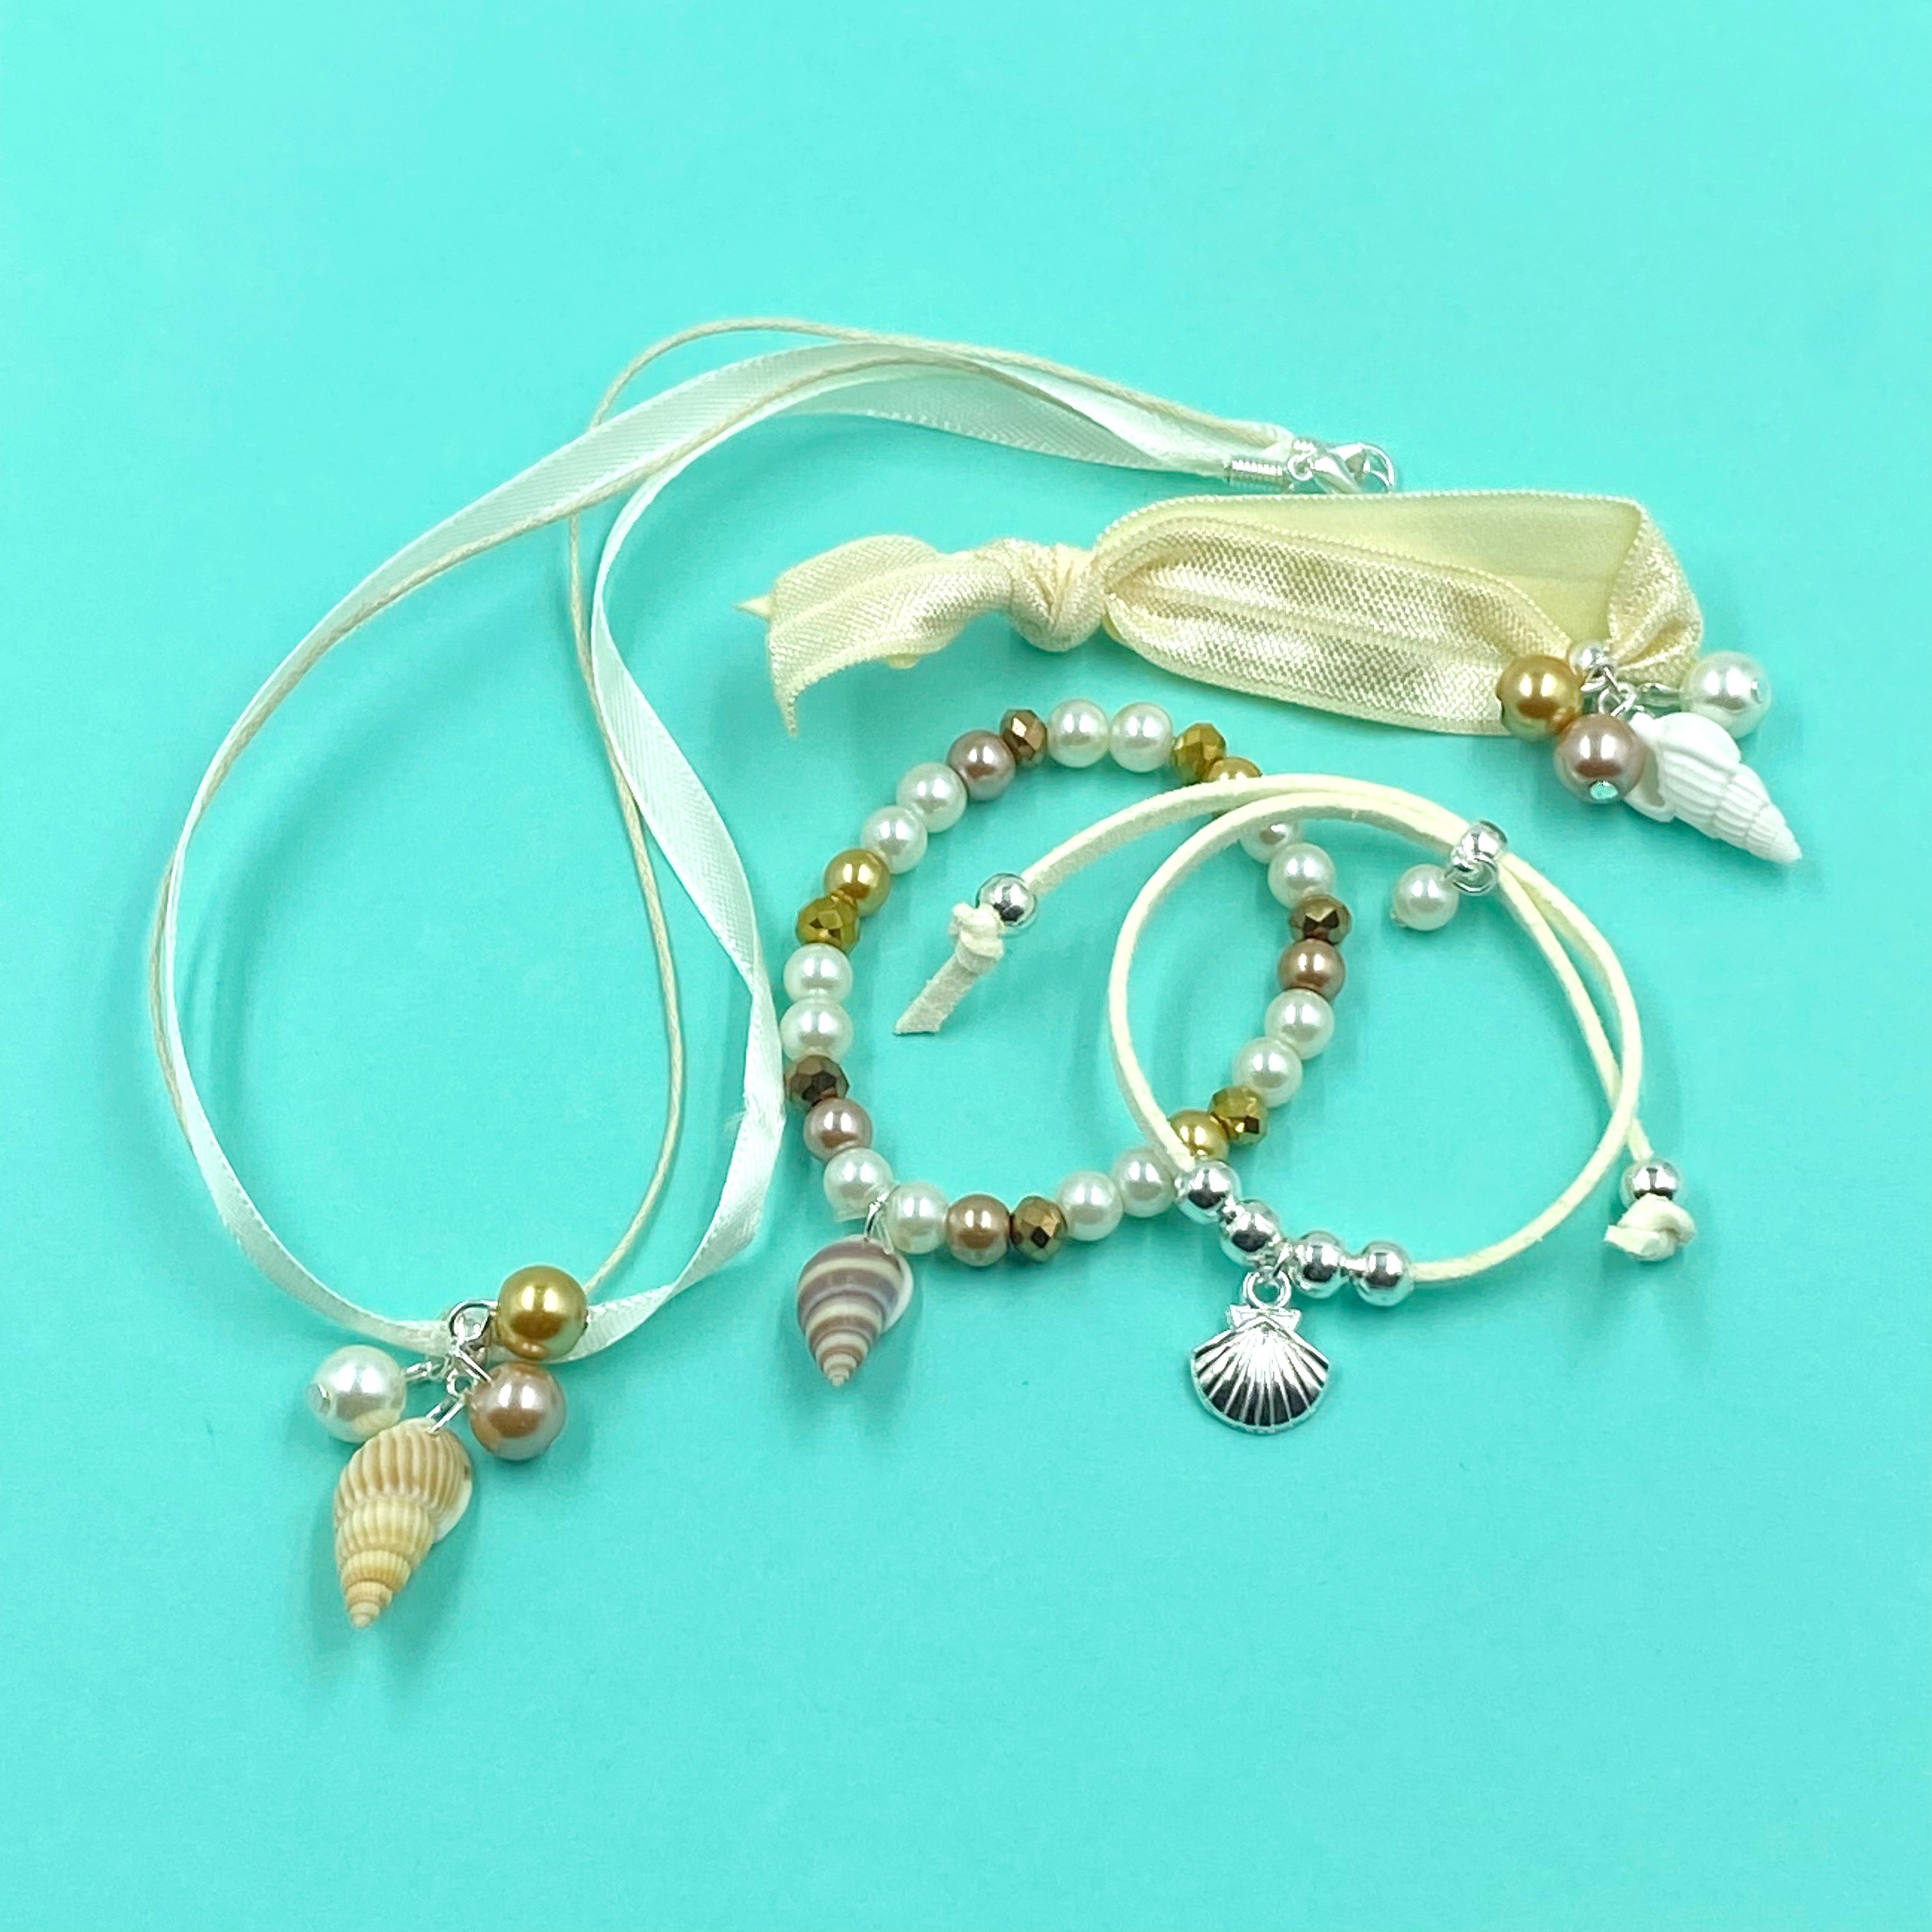 NEW Mermaid Jewellery Making Kits